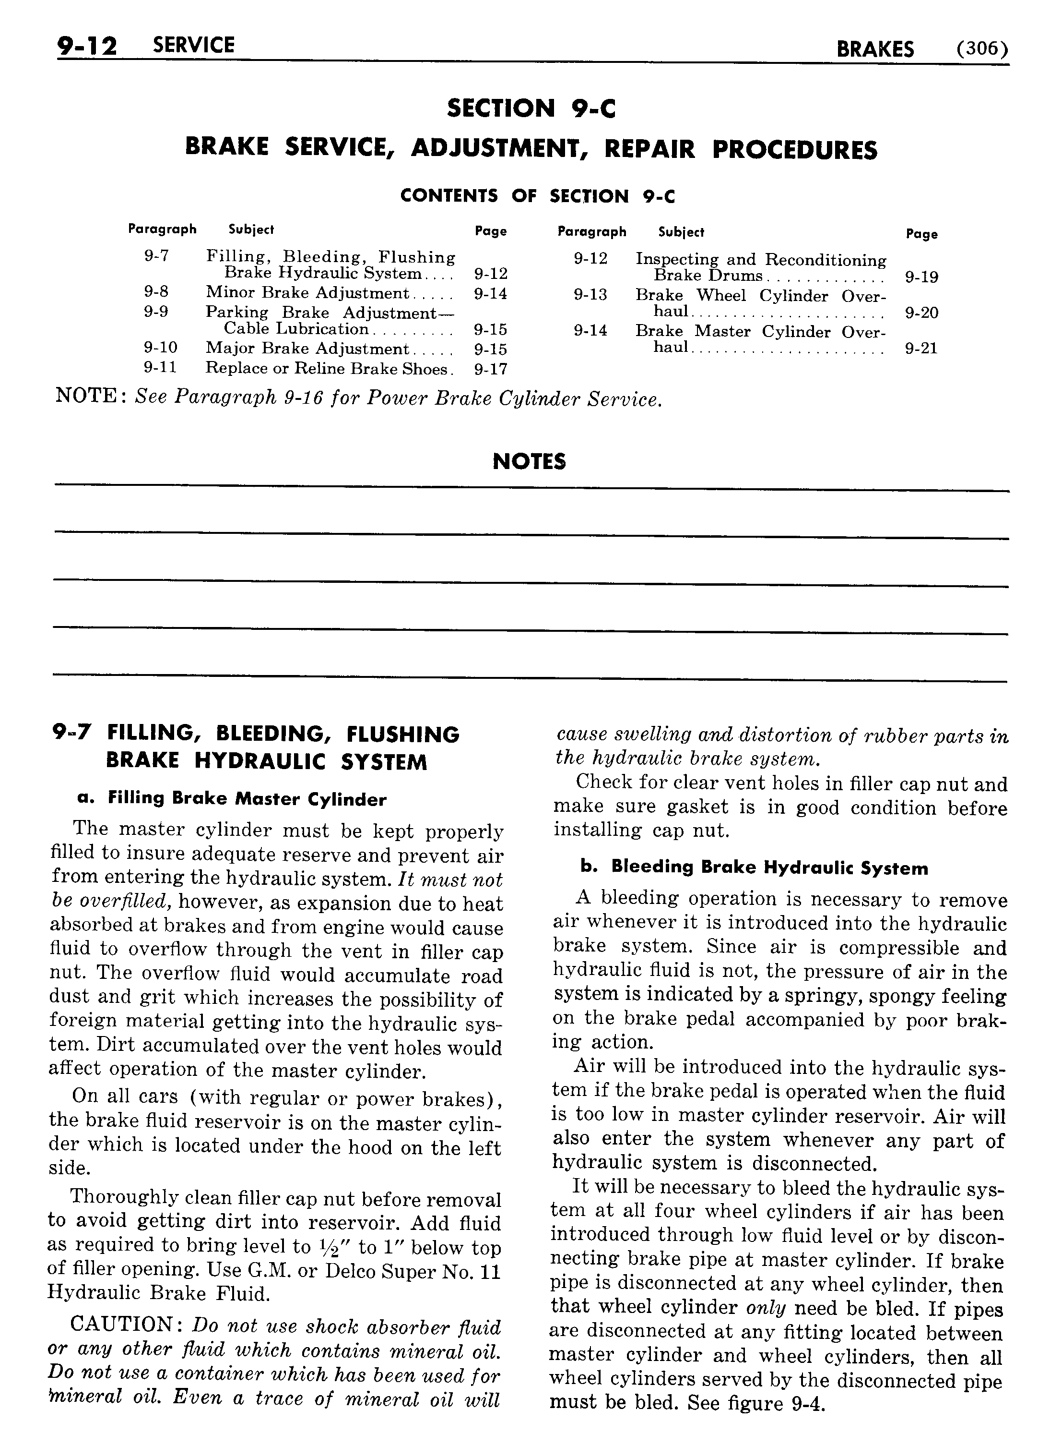 n_10 1956 Buick Shop Manual - Brakes-012-012.jpg